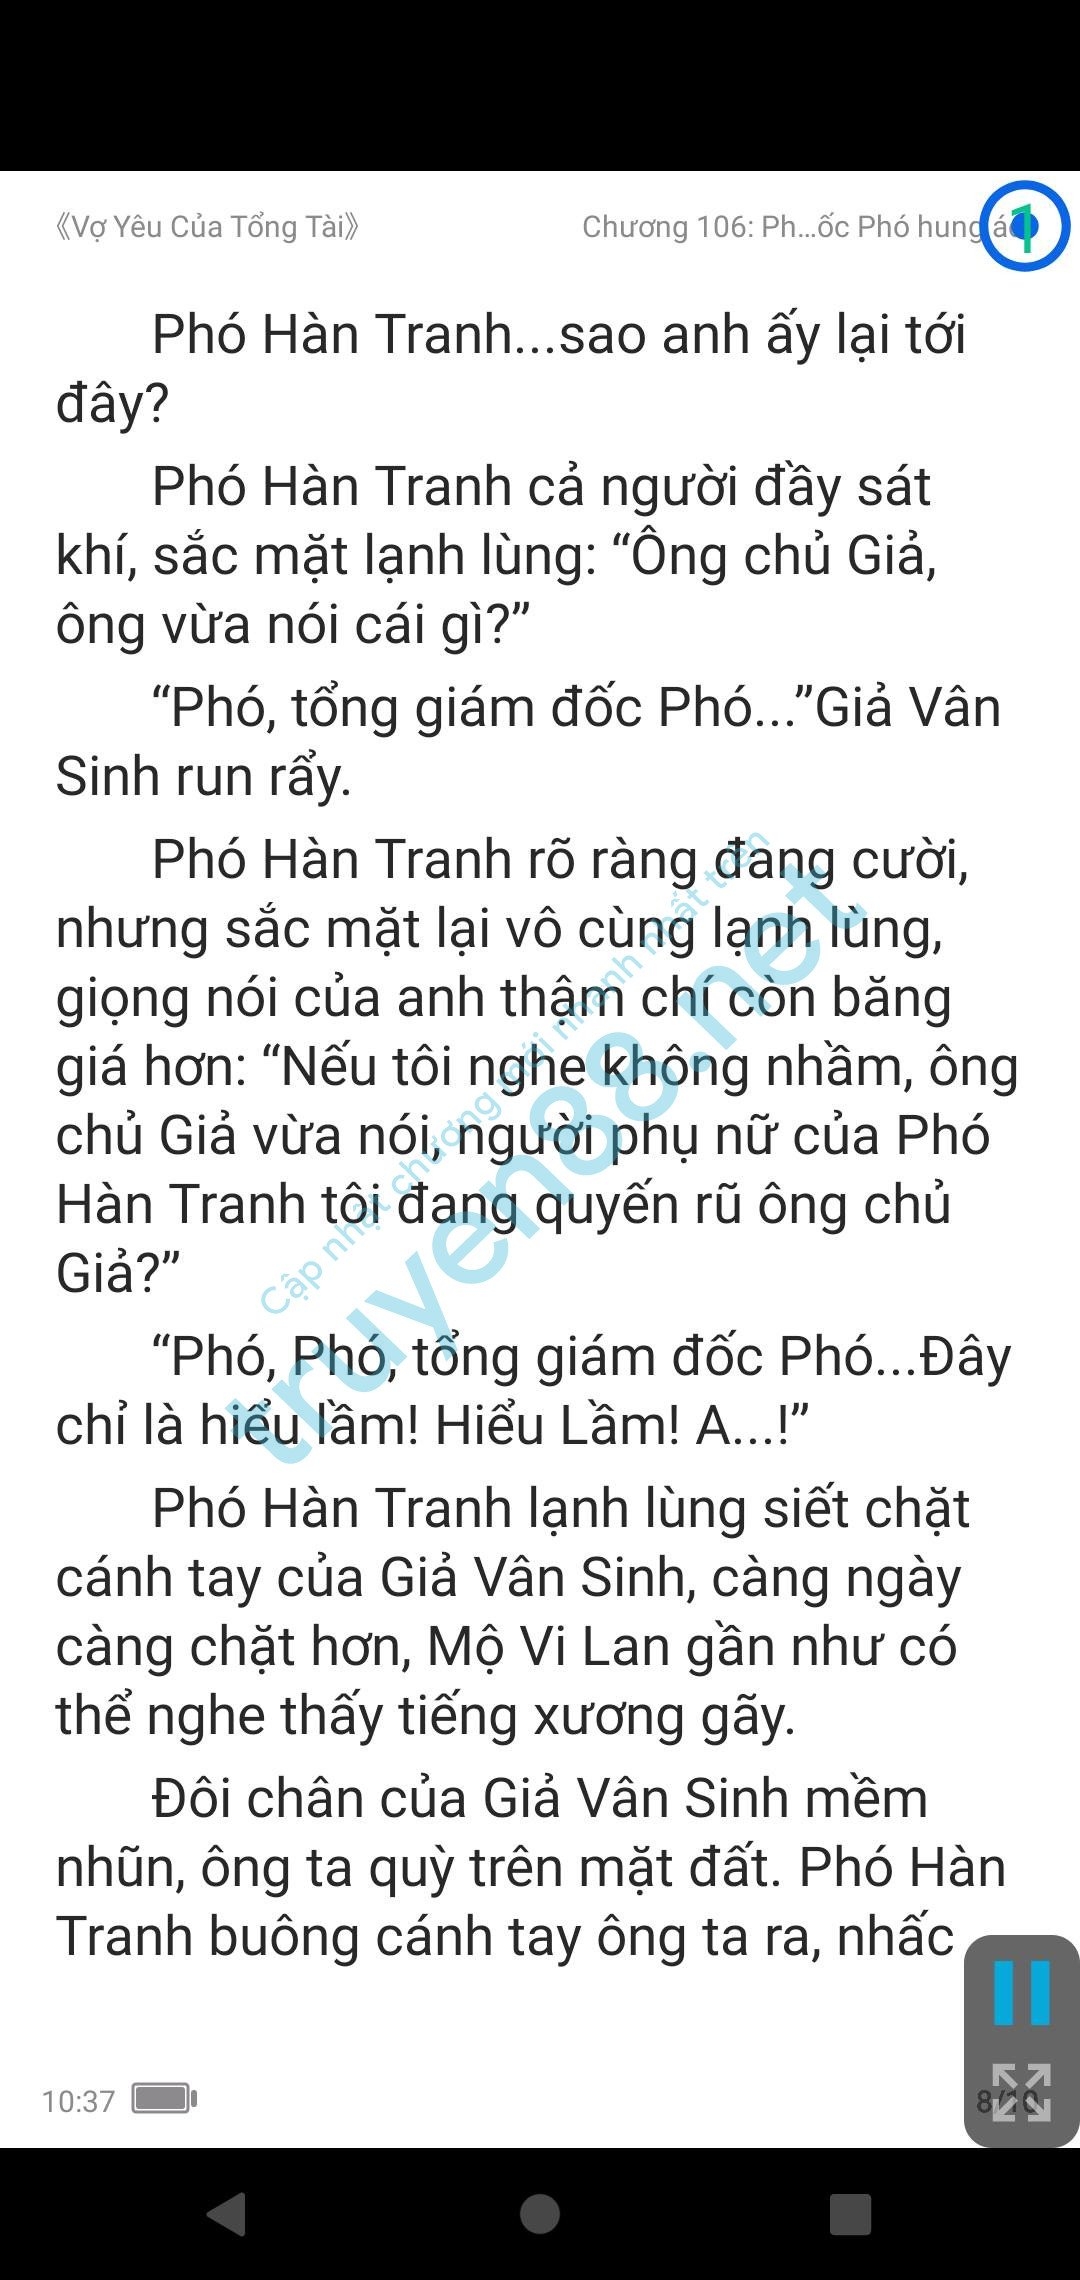 vo-yeu-cua-tong-tai-mo-vi-lan--pho-han-tranh-106-0